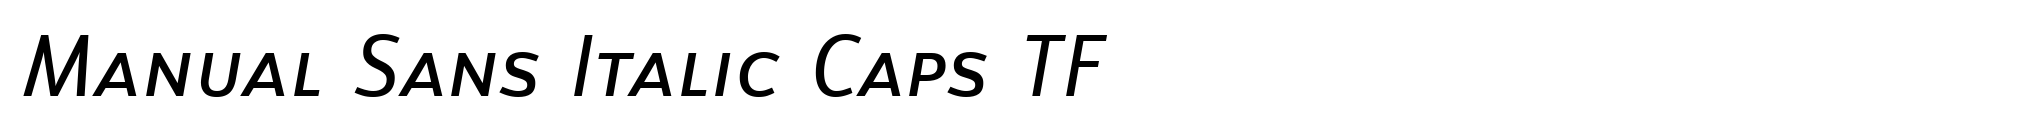 Manual Sans Italic Caps TF image